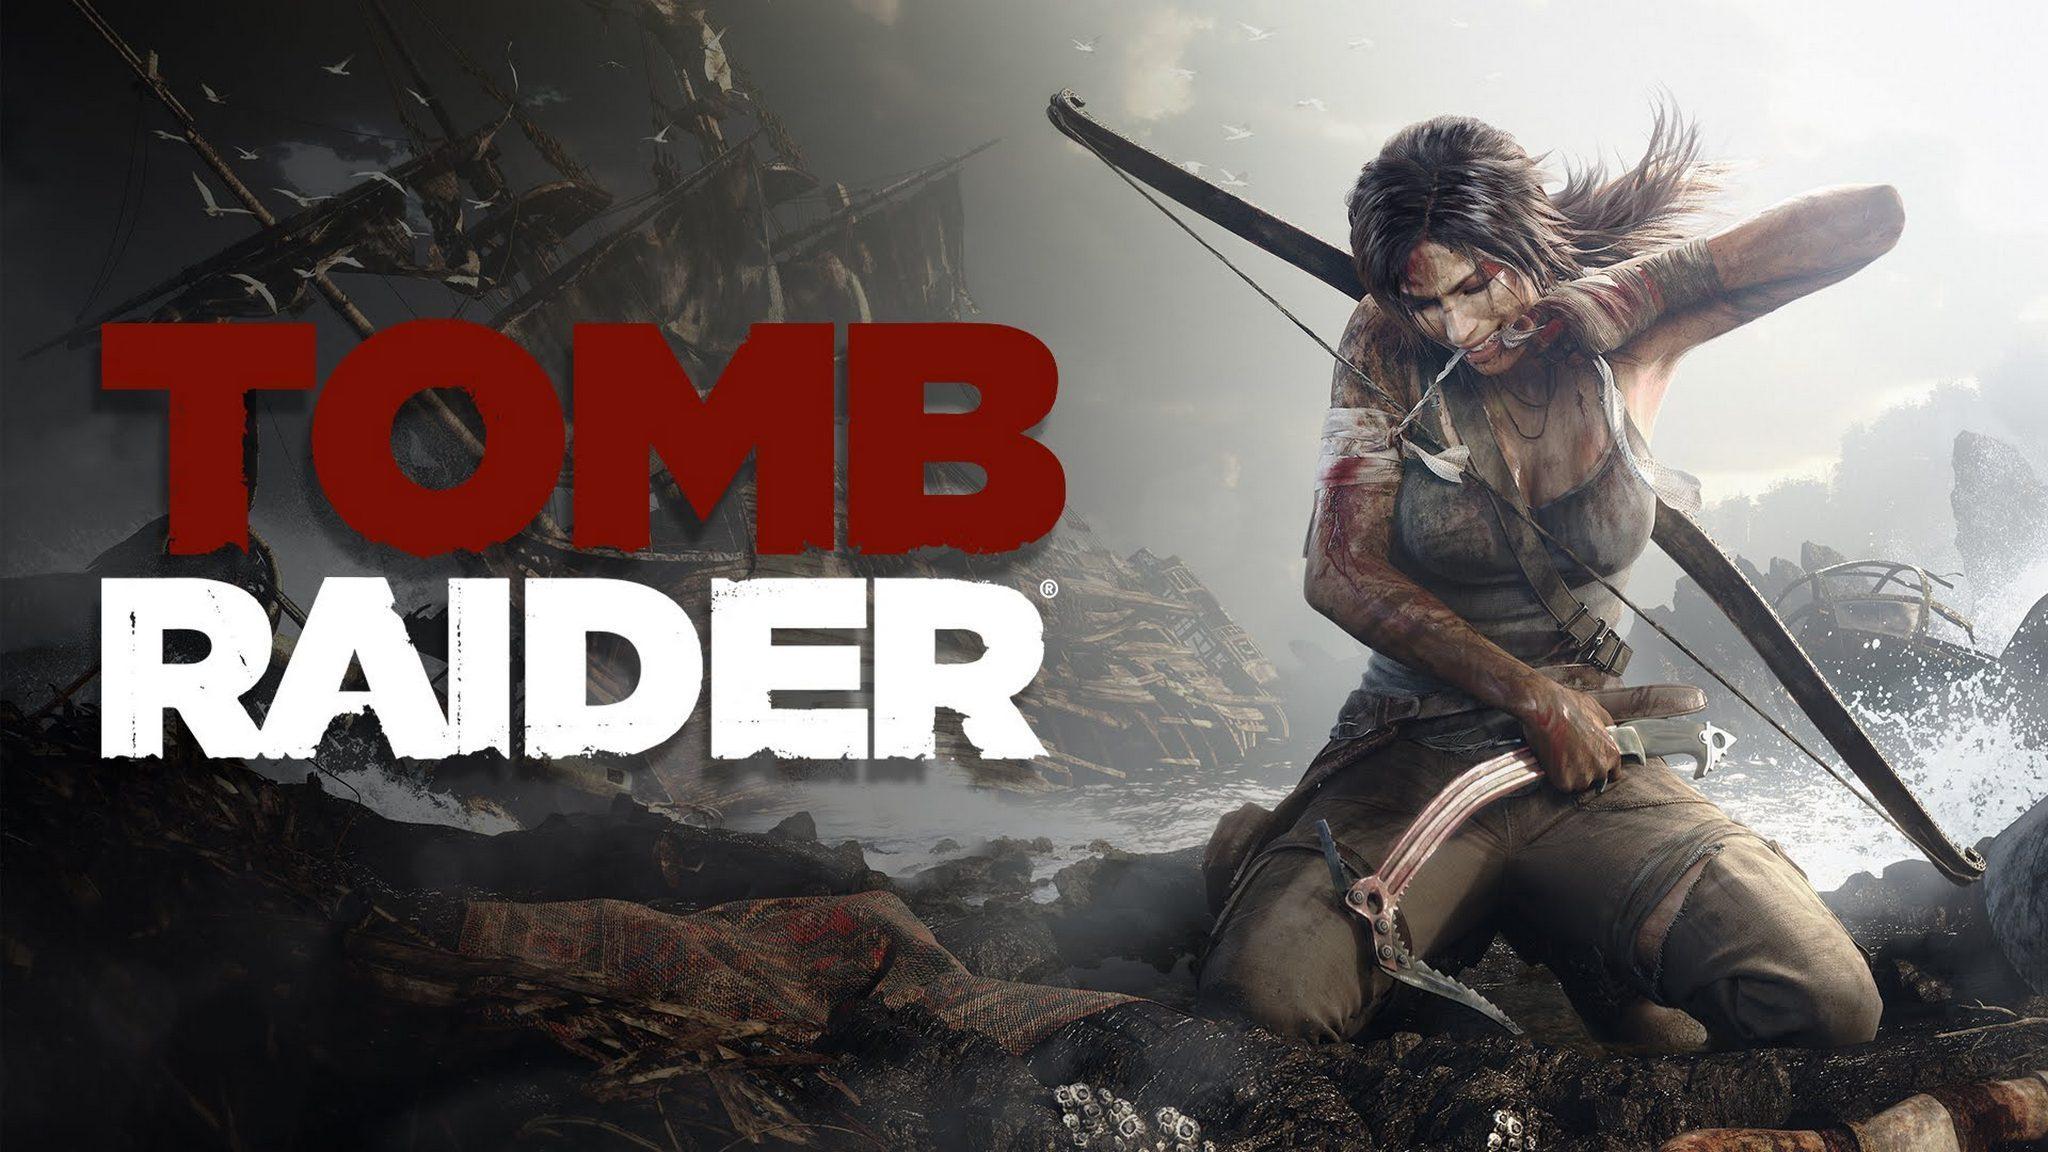 Tomb Raider (2013) Free on Steam Through March 24